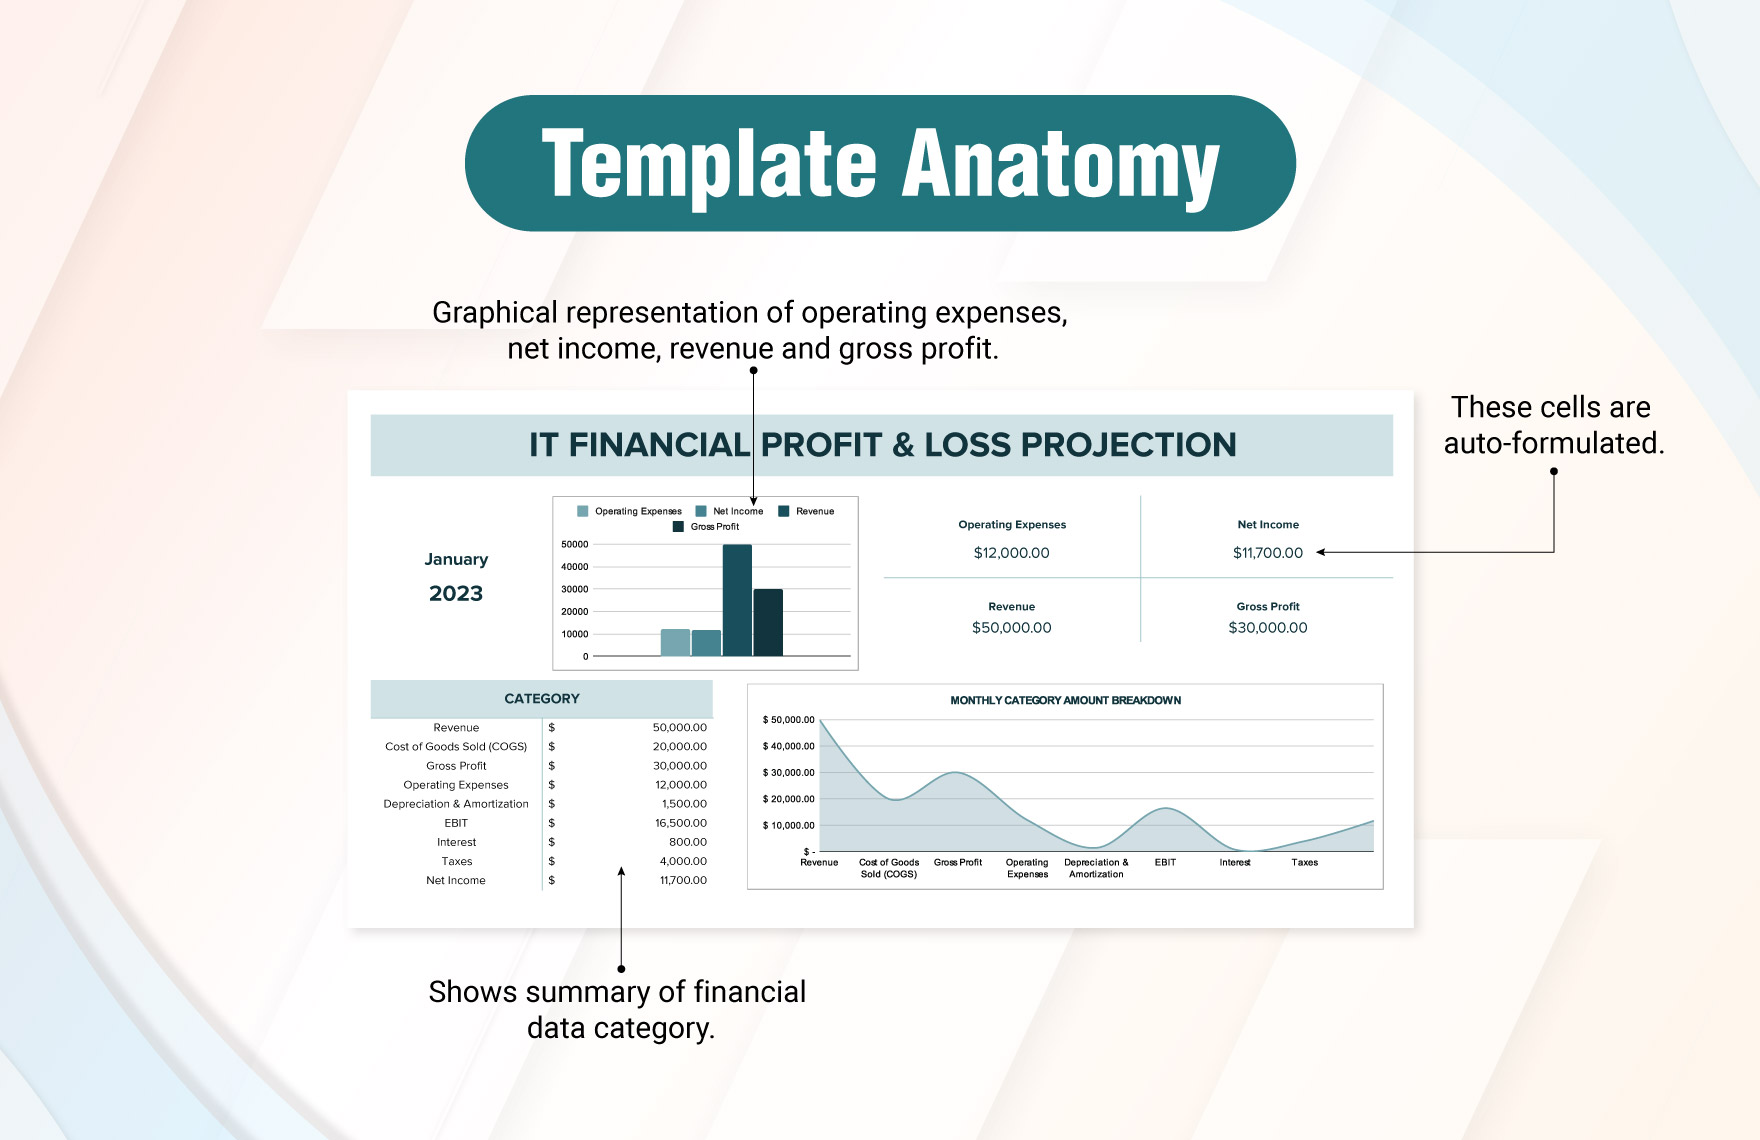 IT Financial Profit & Loss Projection Template